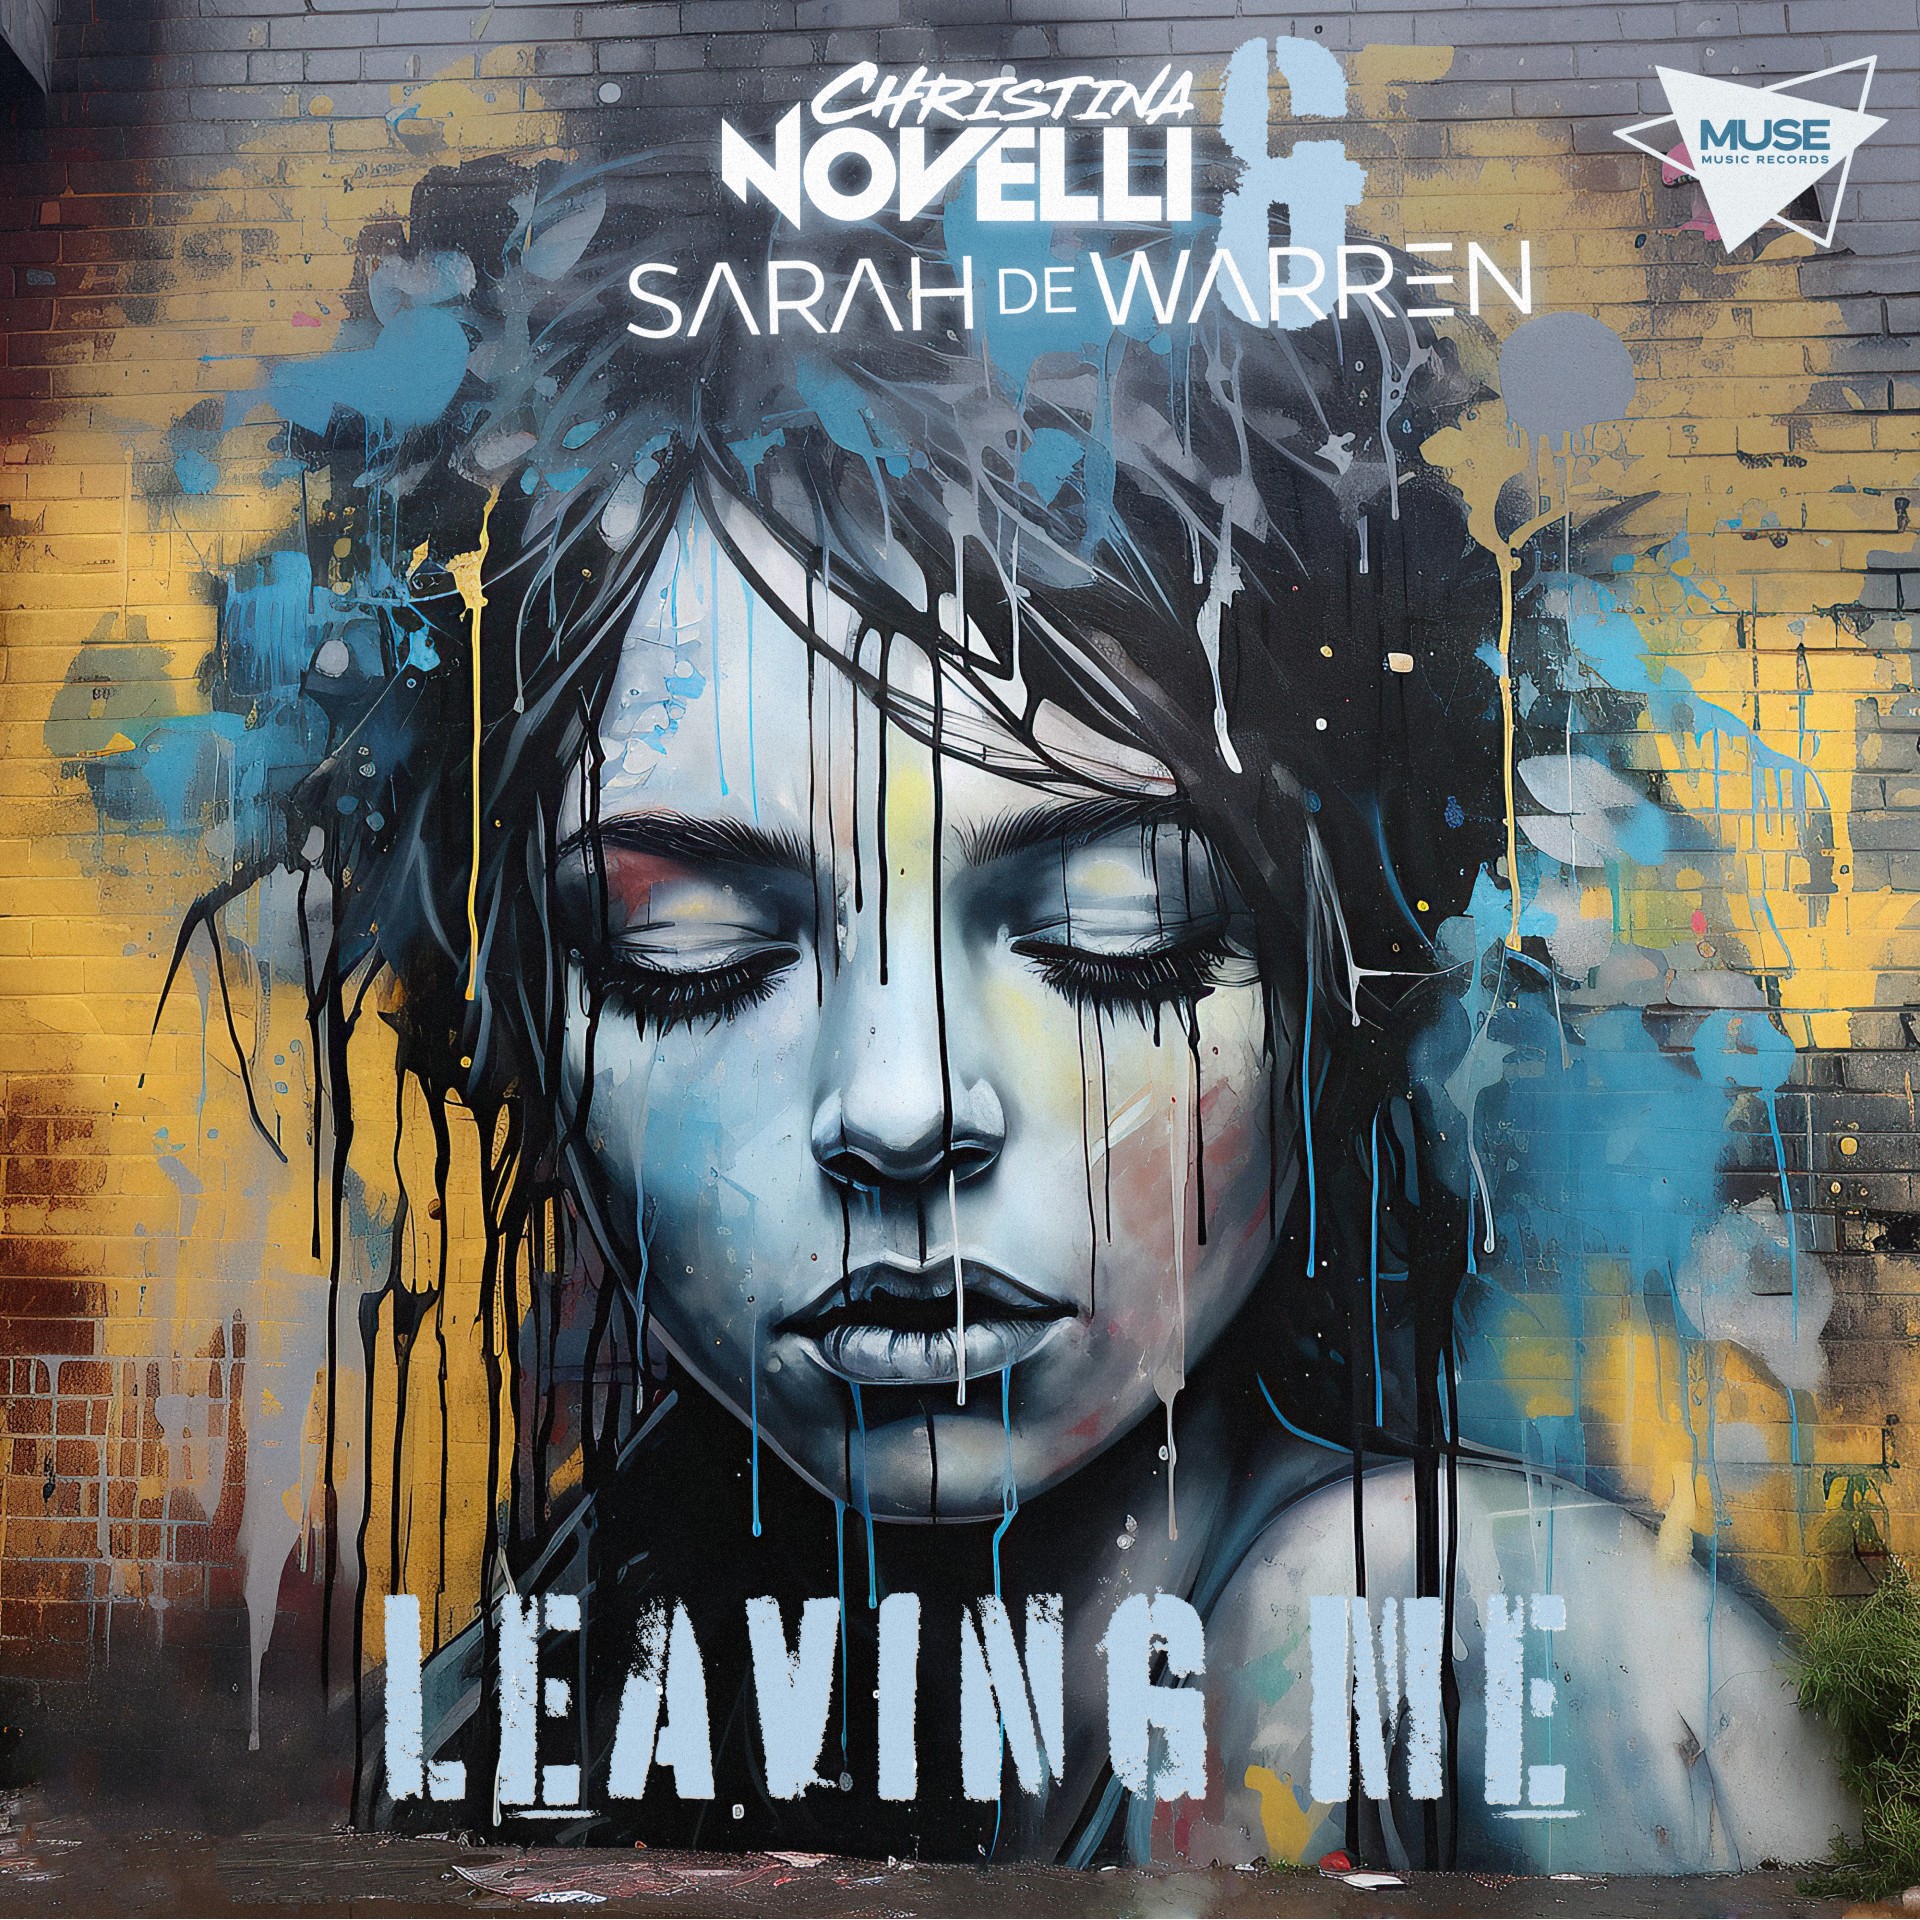 Christina Novelli and Sarah de Warren presents Leaving Me on Black Hole Recordings